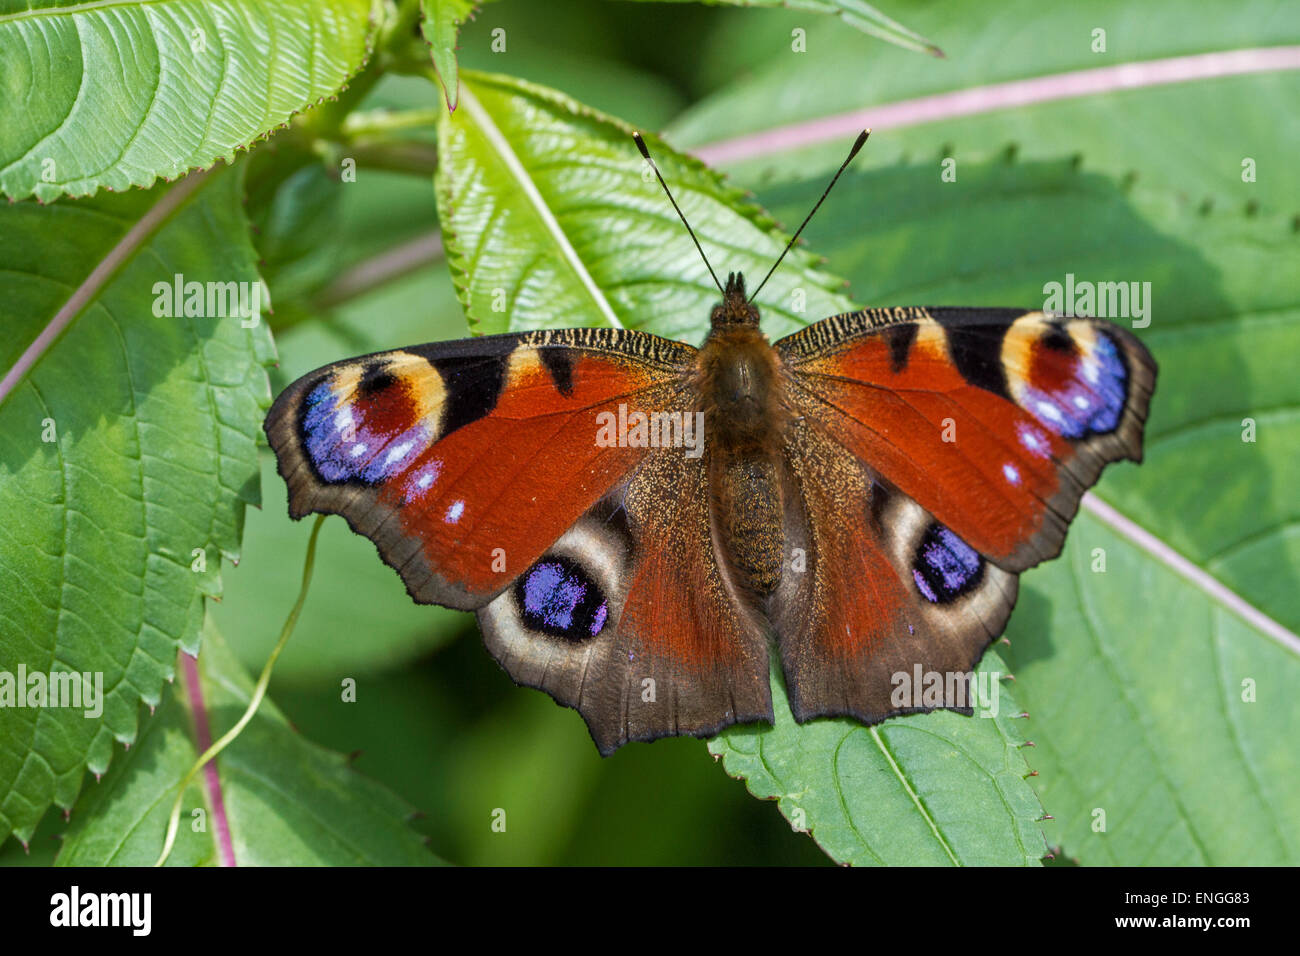 European peacock butterfly (Aglais io) on leaf Stock Photo